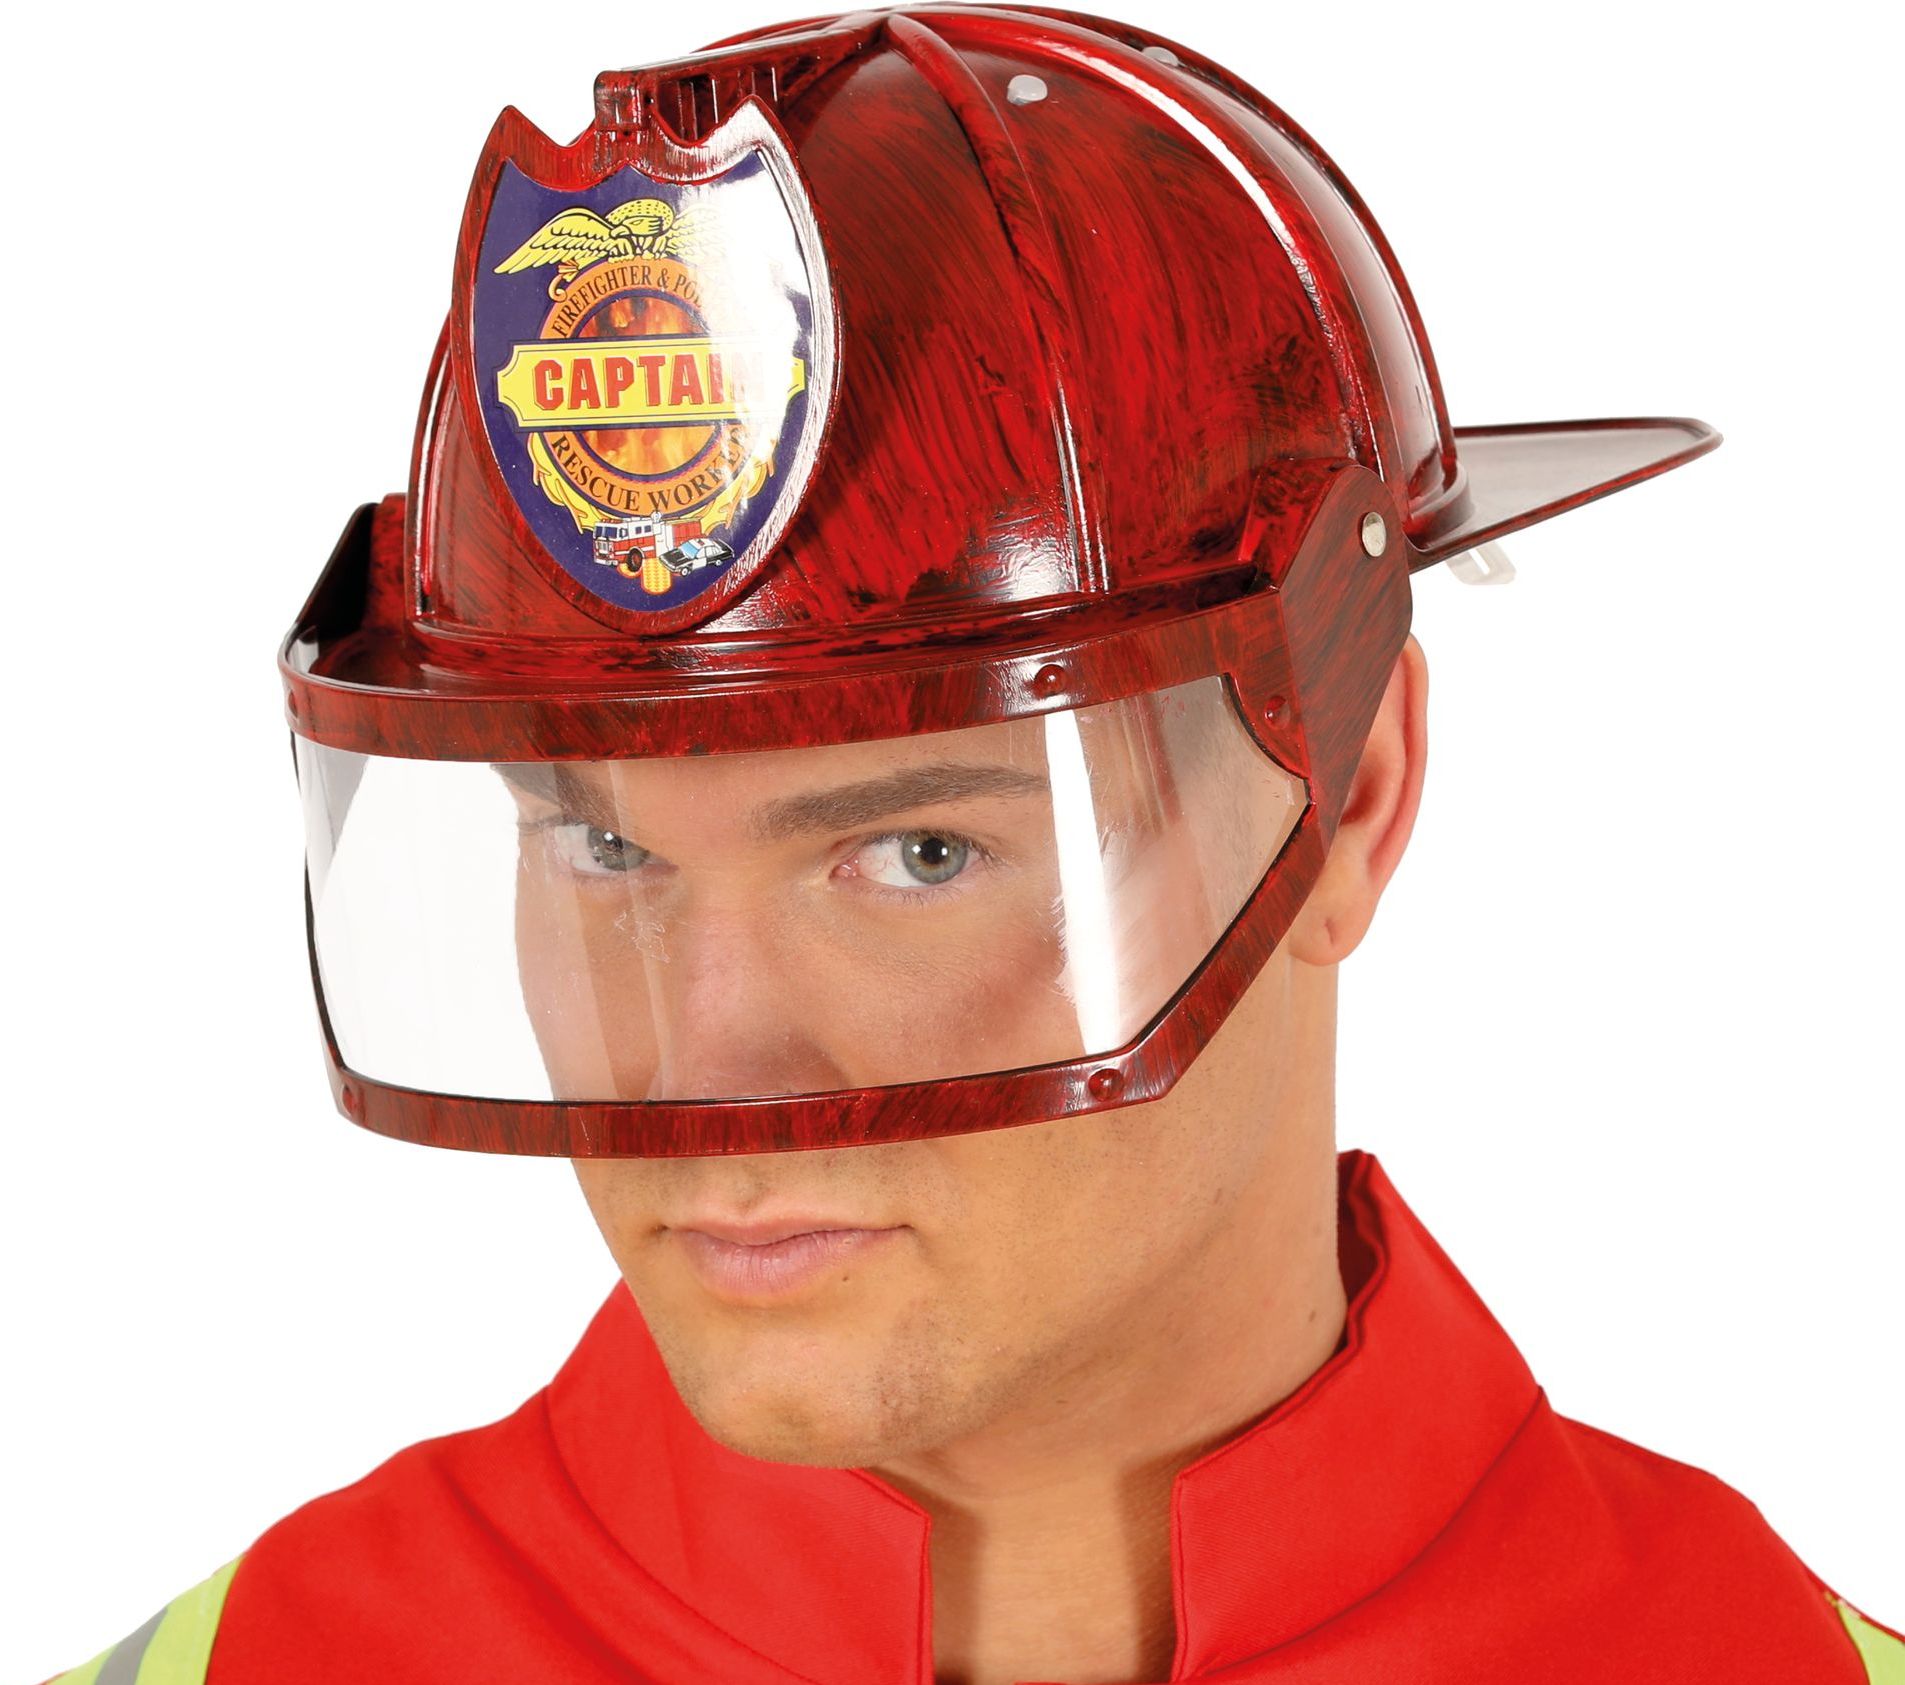 Brandweercommandant helm